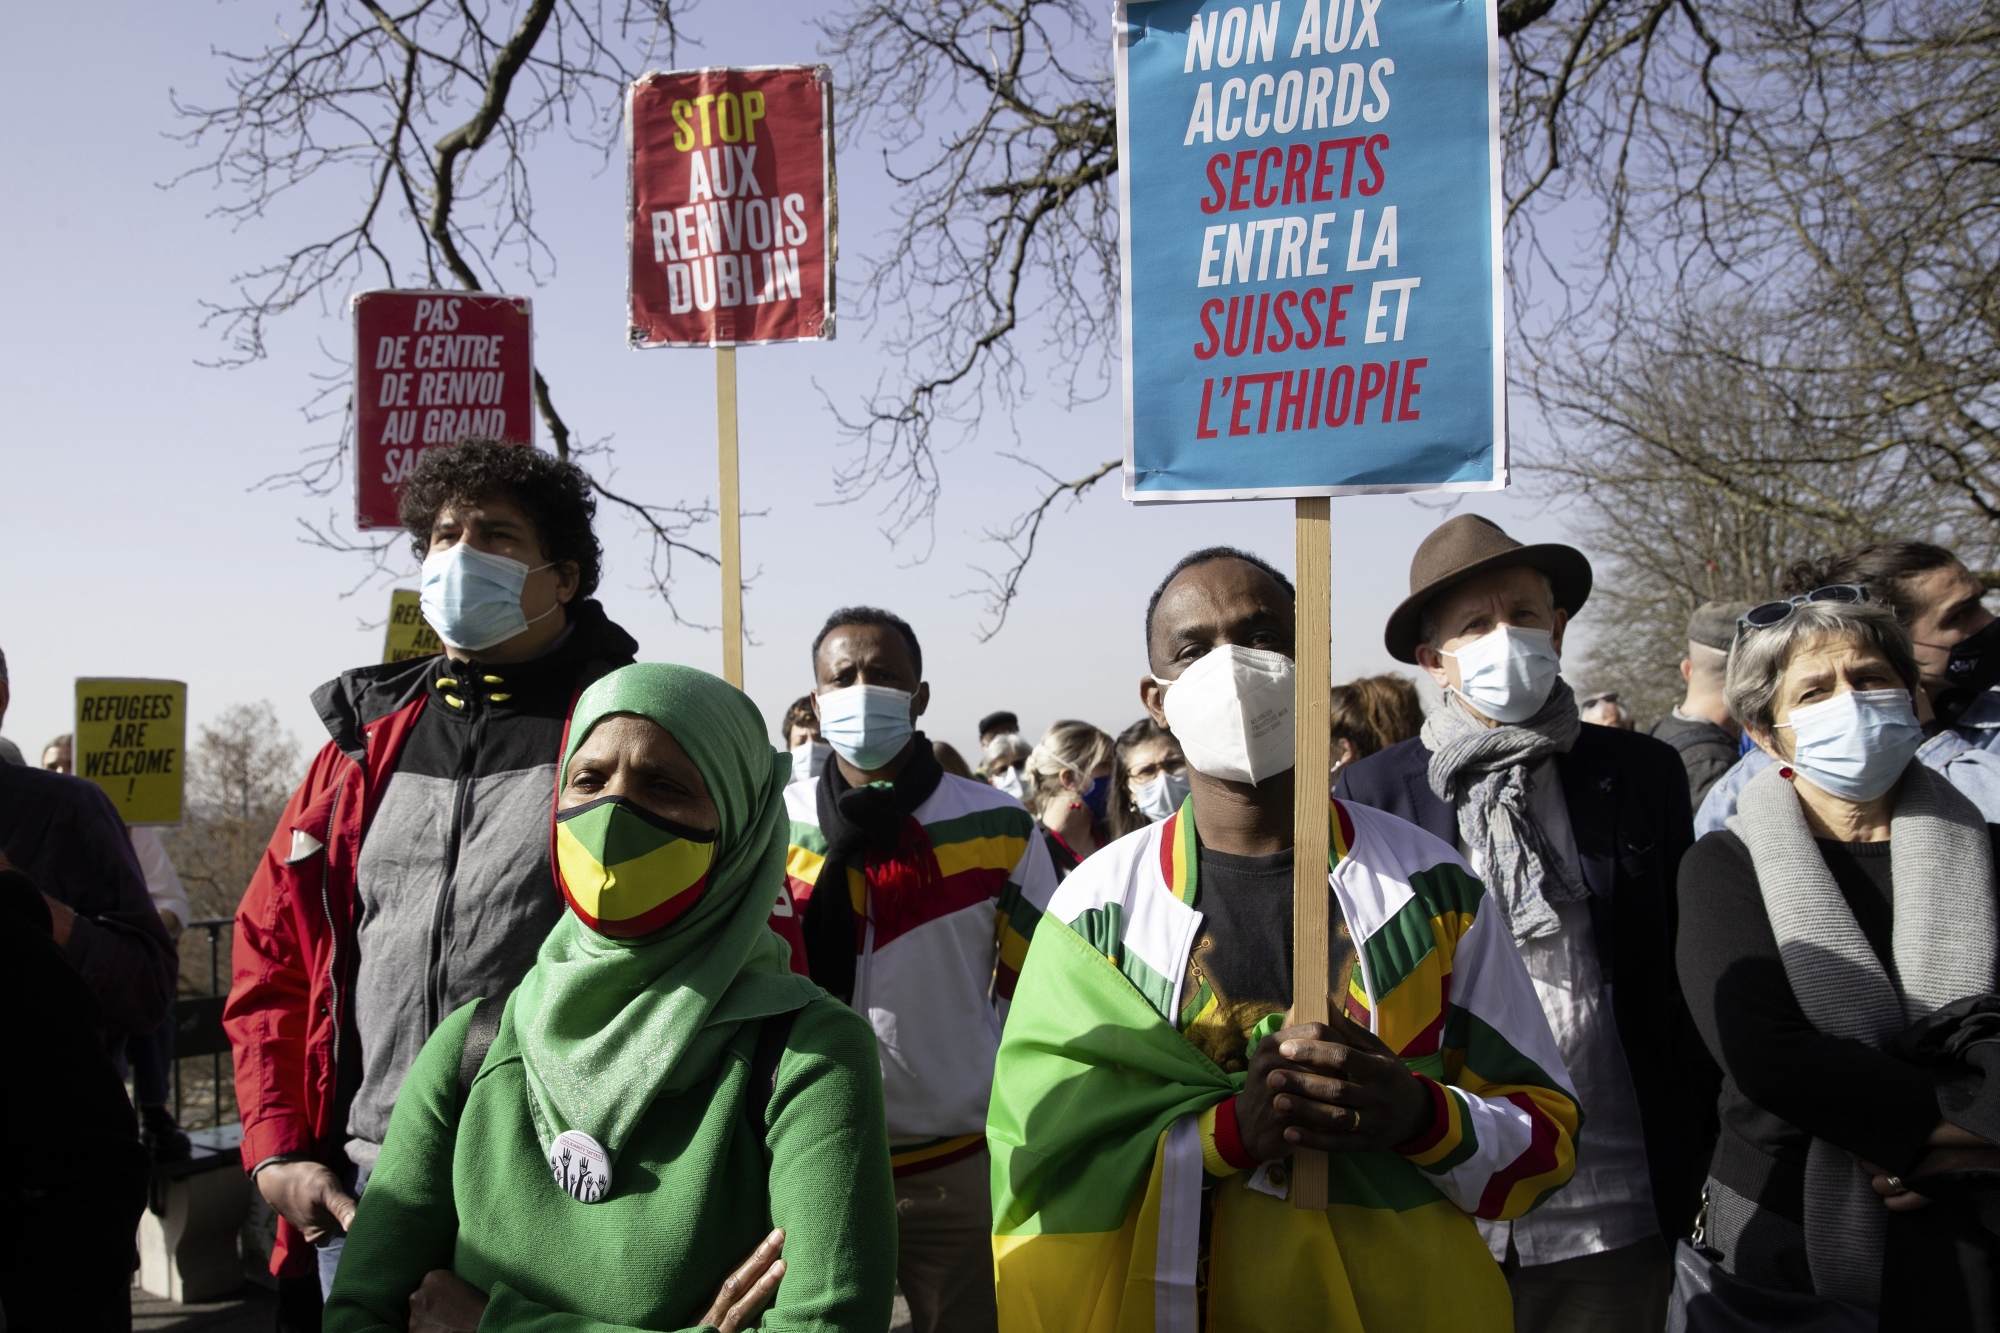 Des manifestants protestent contre les vols speciaux de rapatriement des requerants d'asile a l'appel de Solidarite Tattes sur la promenade de la Treille, ce mercredi 24 fevrier 2021 a Geneve. (KEYSTONE/Salvatore Di Nolfi)